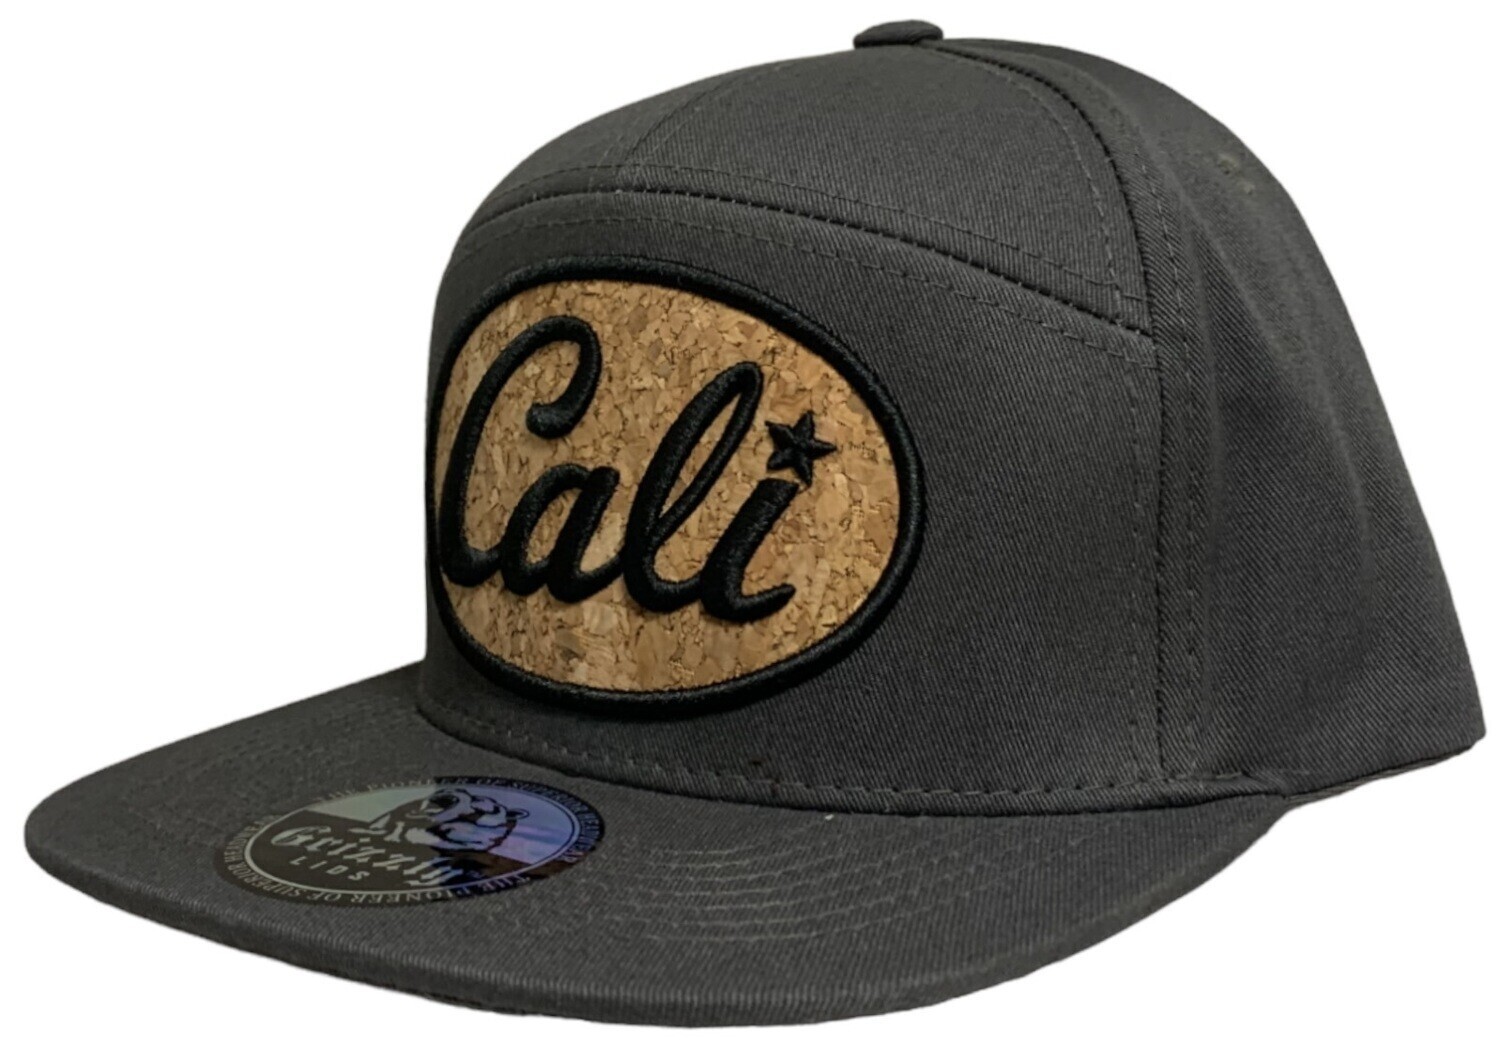 Cali Cursive Oval Cork Snapback 6 Panel Adjustable Snap Fit Hat